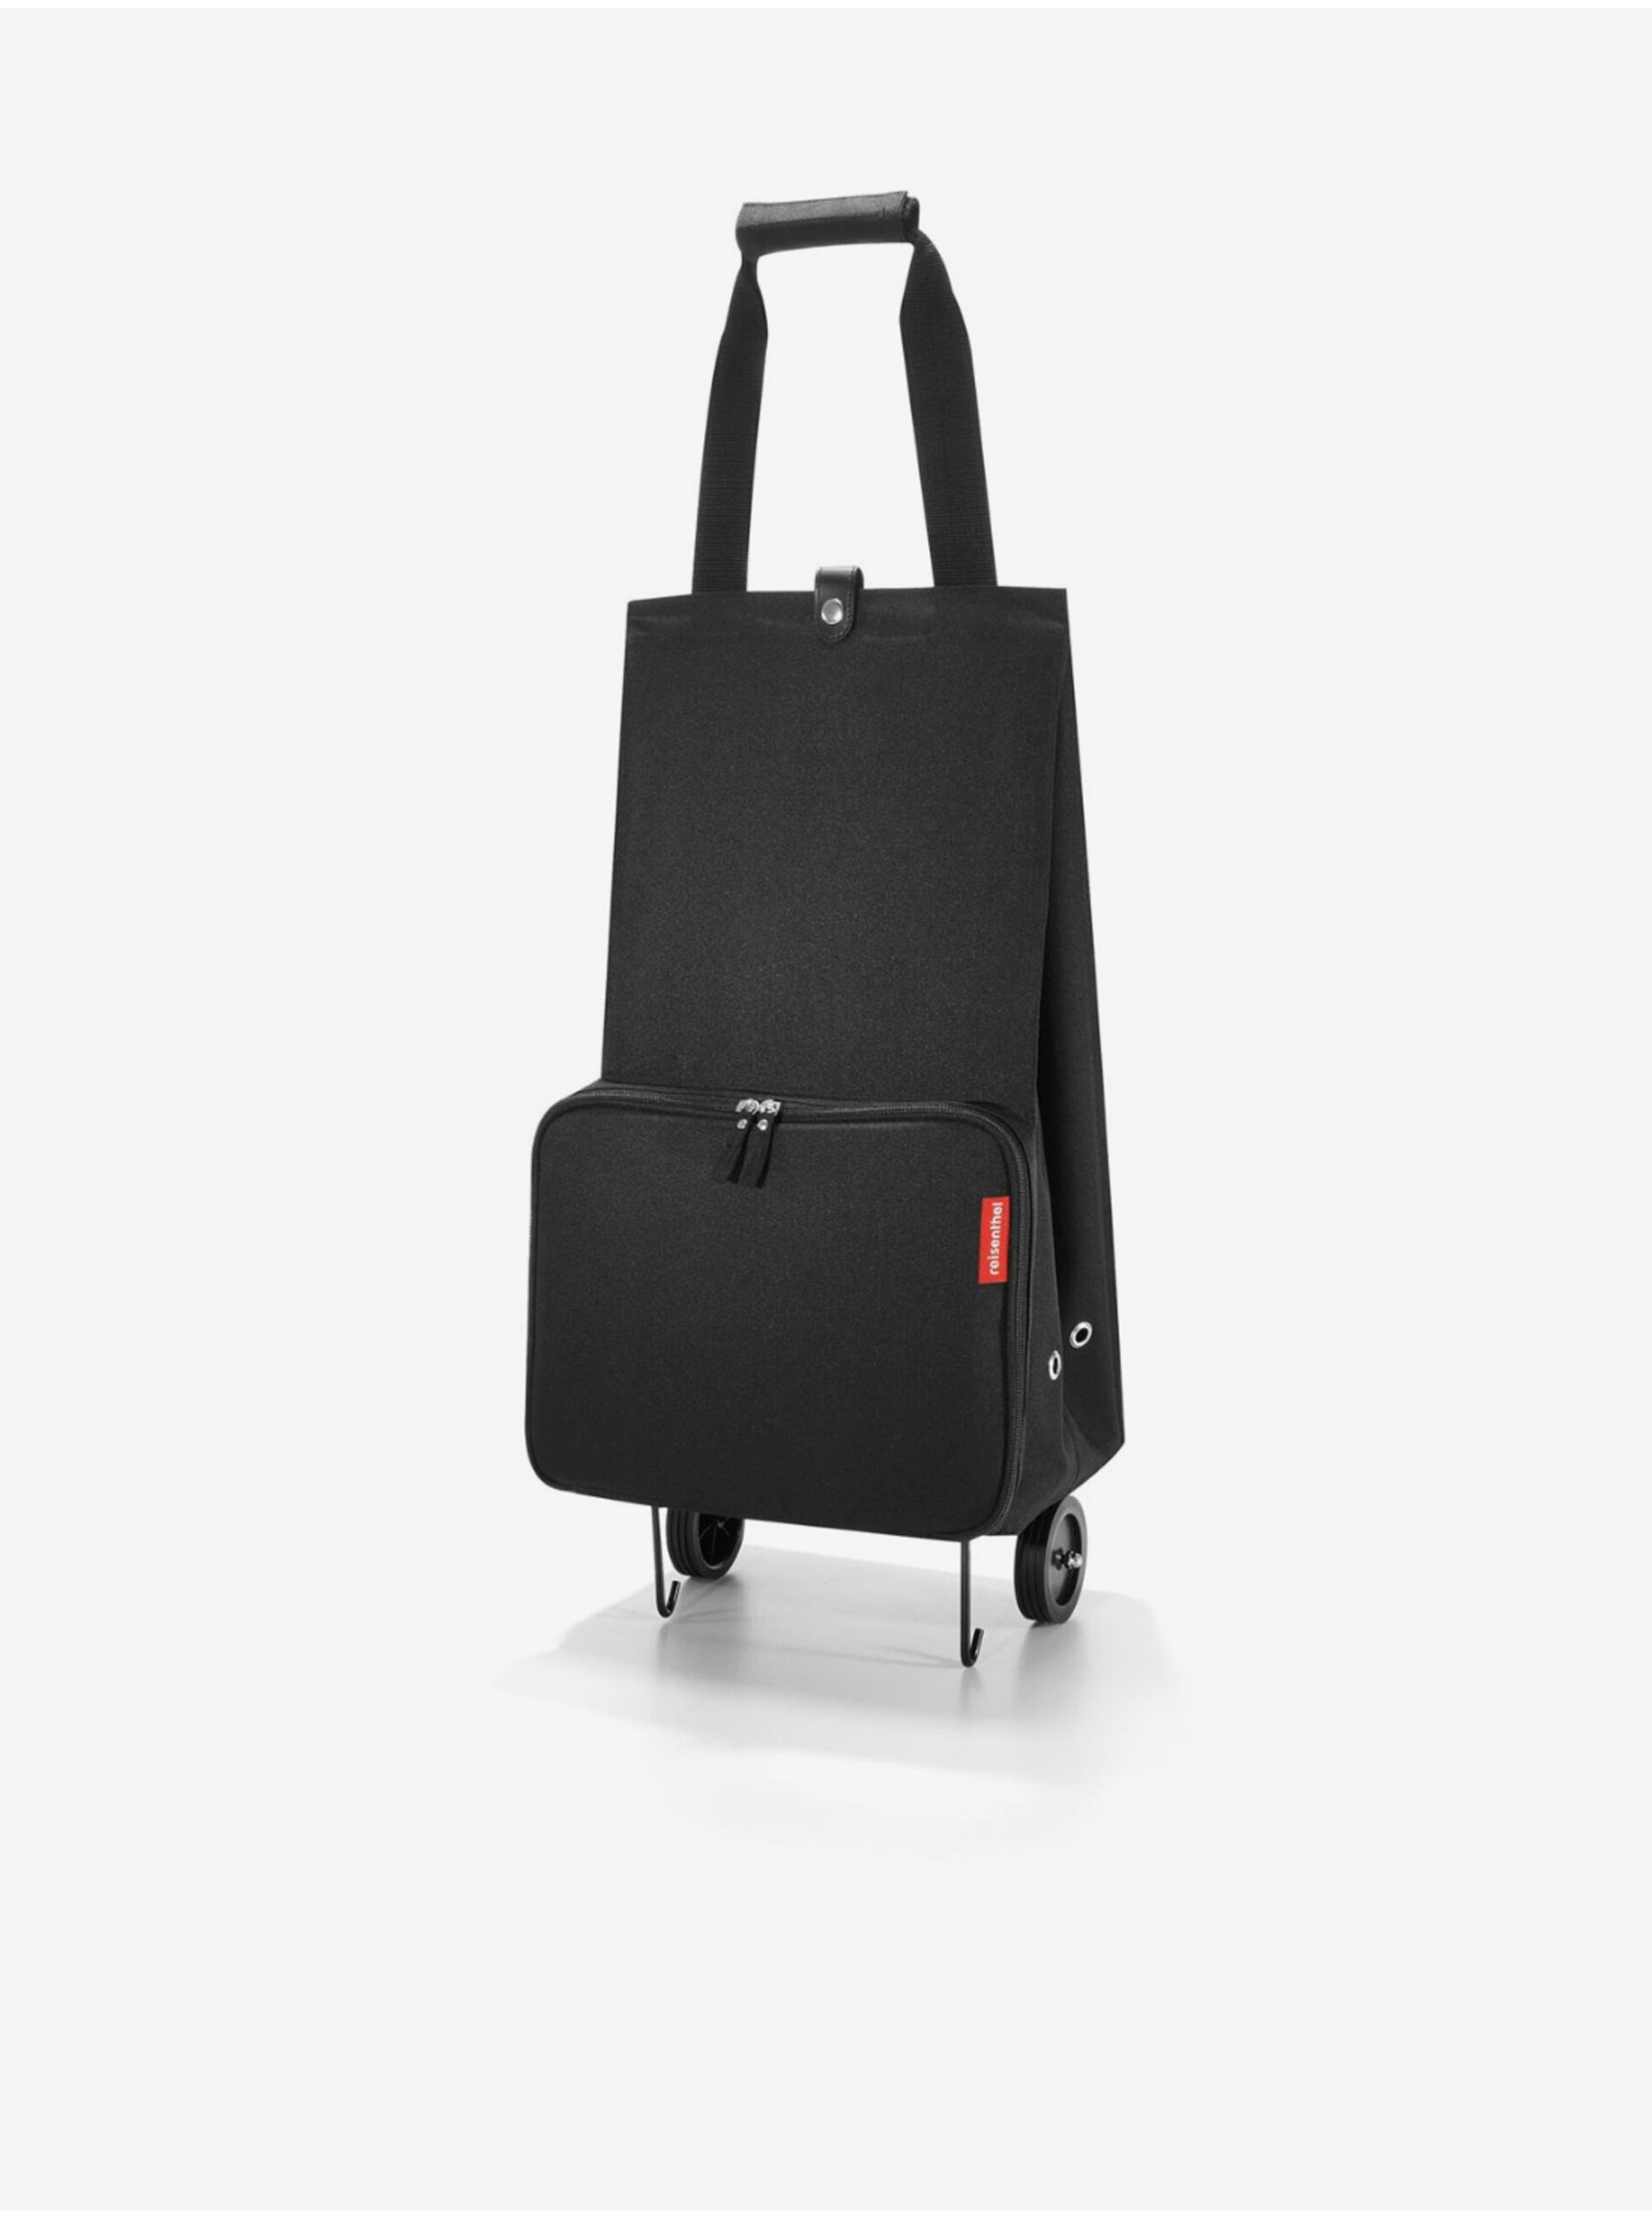 E-shop Čierna nákupná taška na kolieskach Reisenthel Foldabletrolley